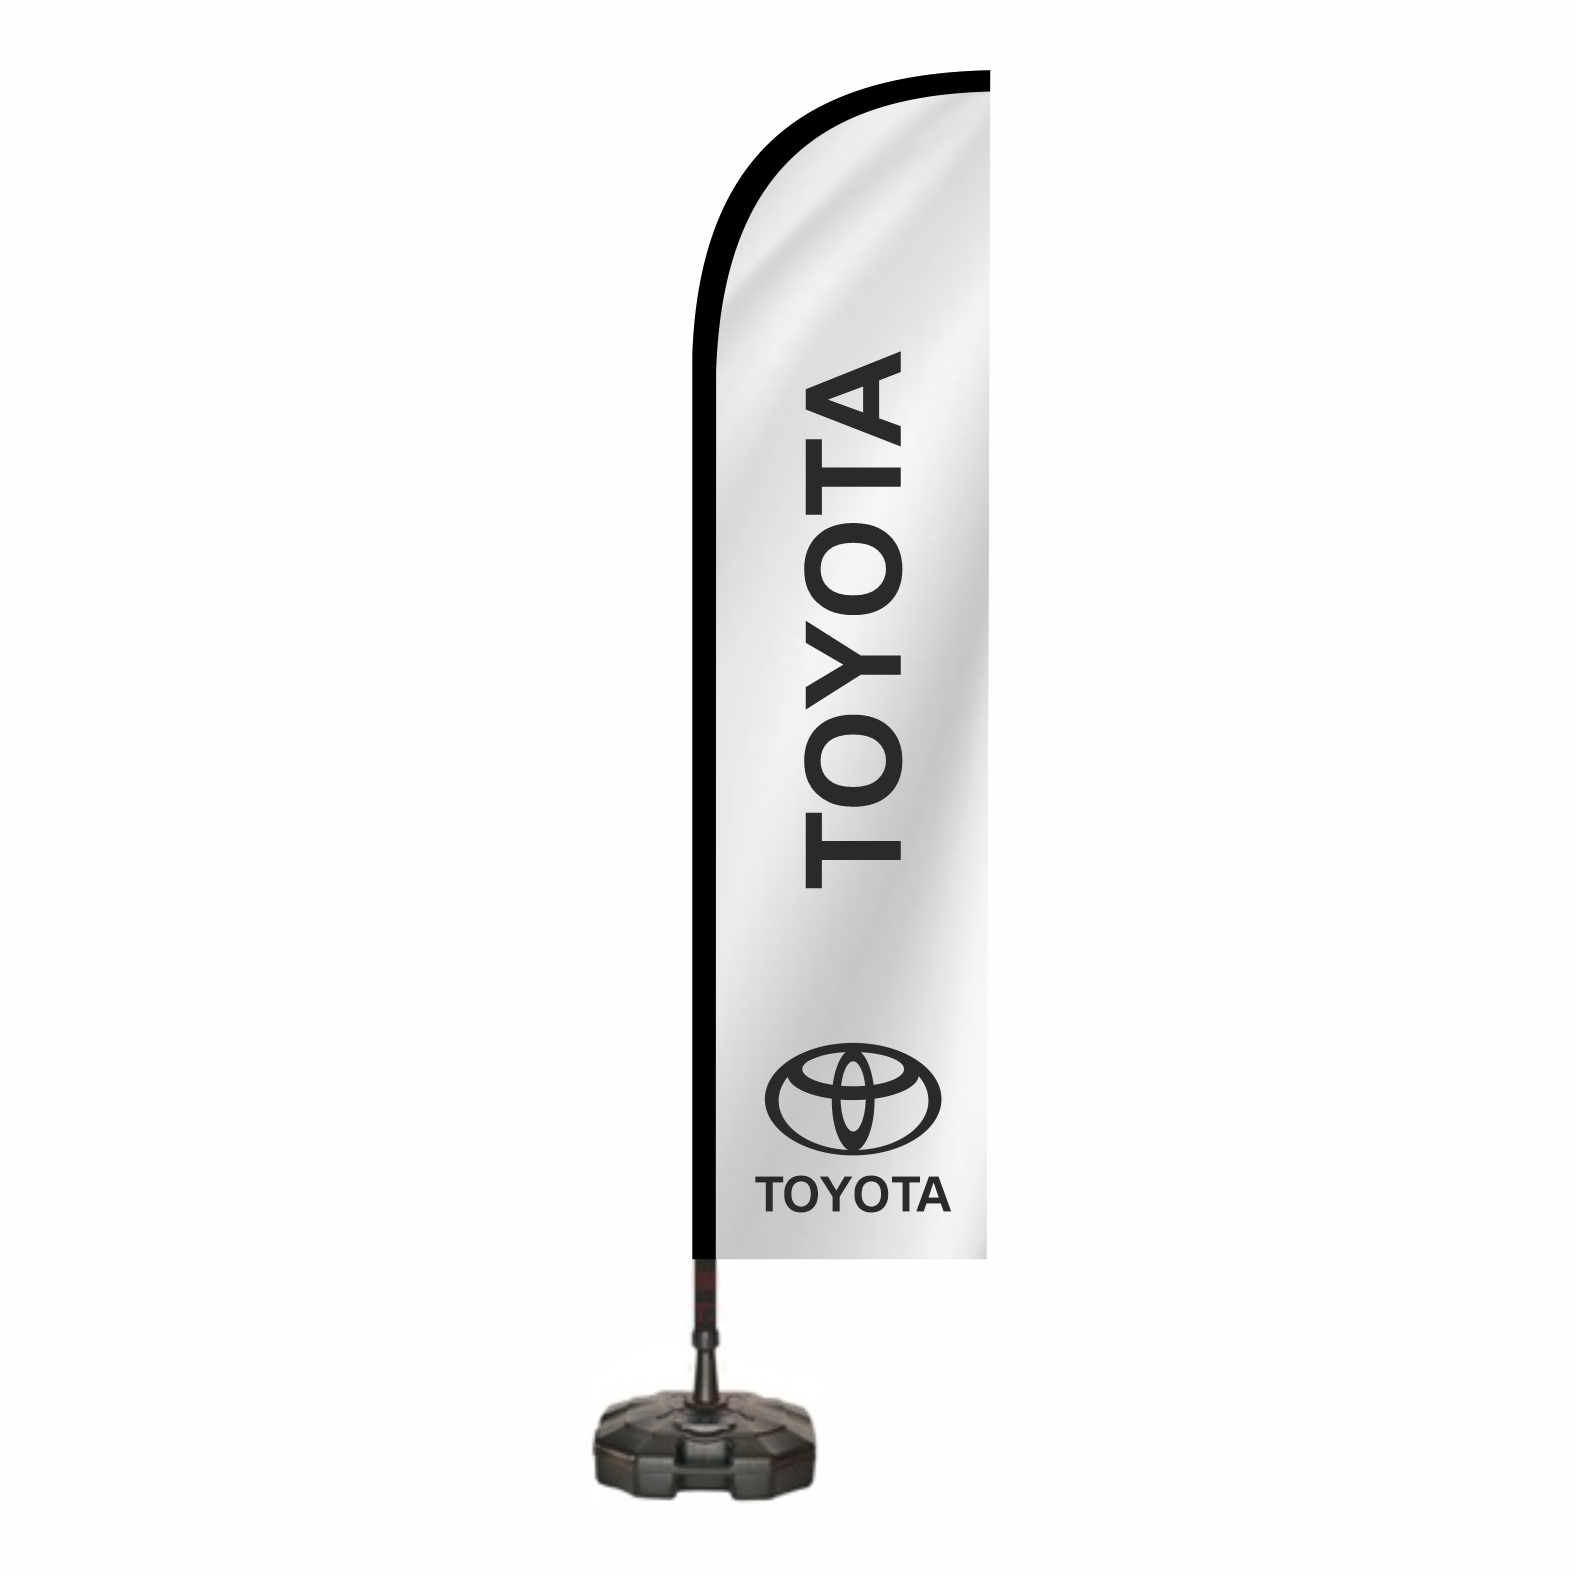 Toyota Reklam Bayra Nerede Yaptrlr